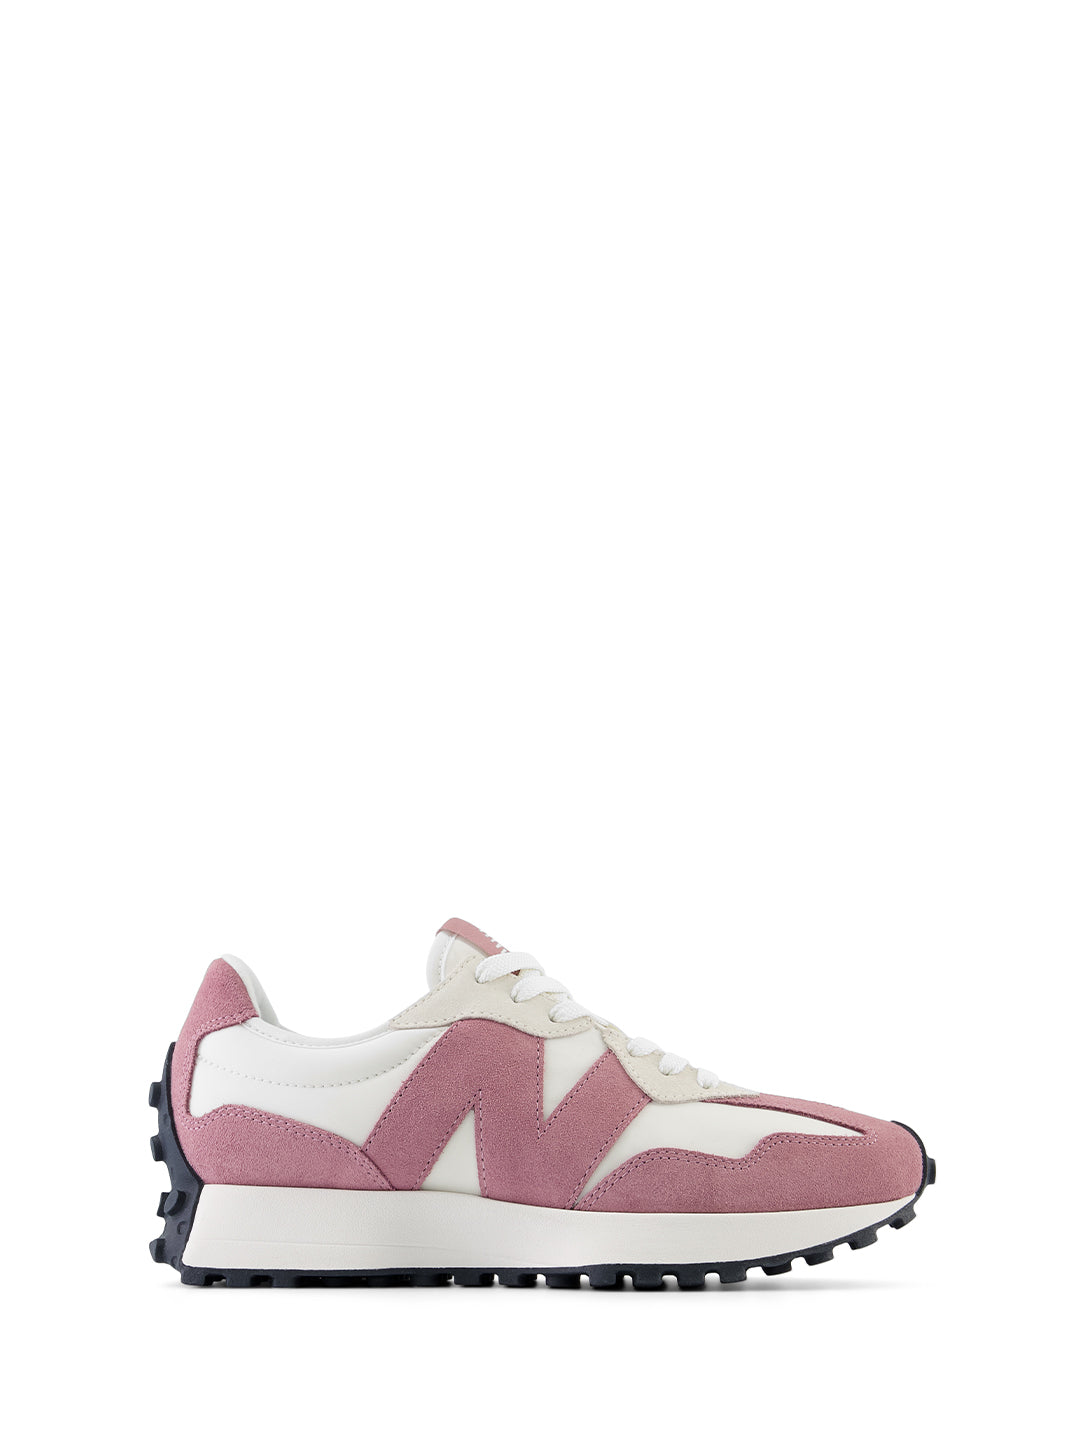 New Balance 327 sneakers rosa e bianco